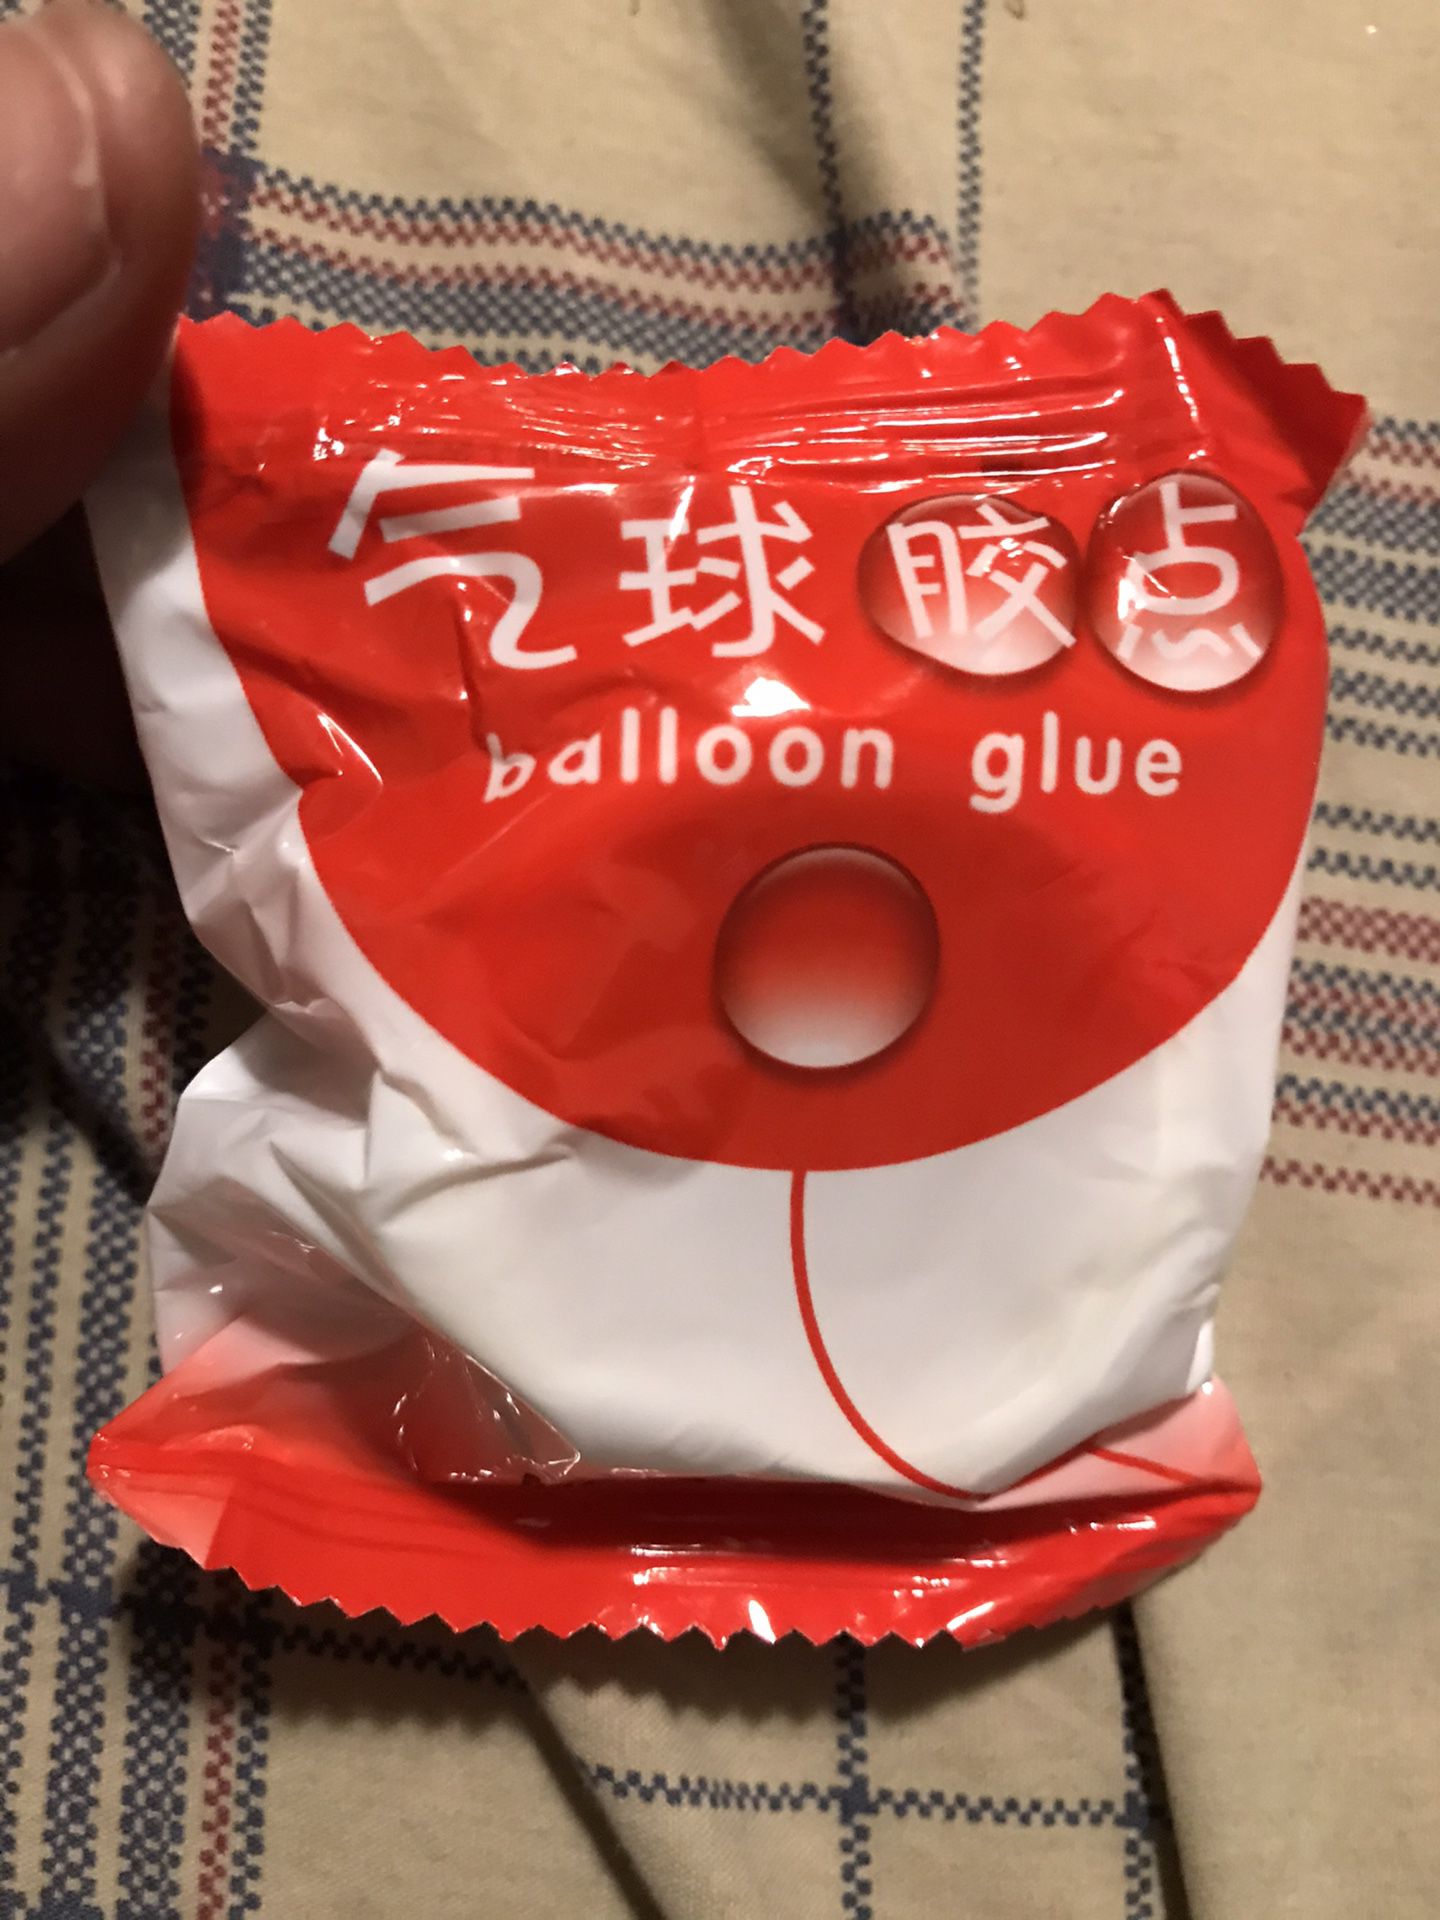 Balloon glue